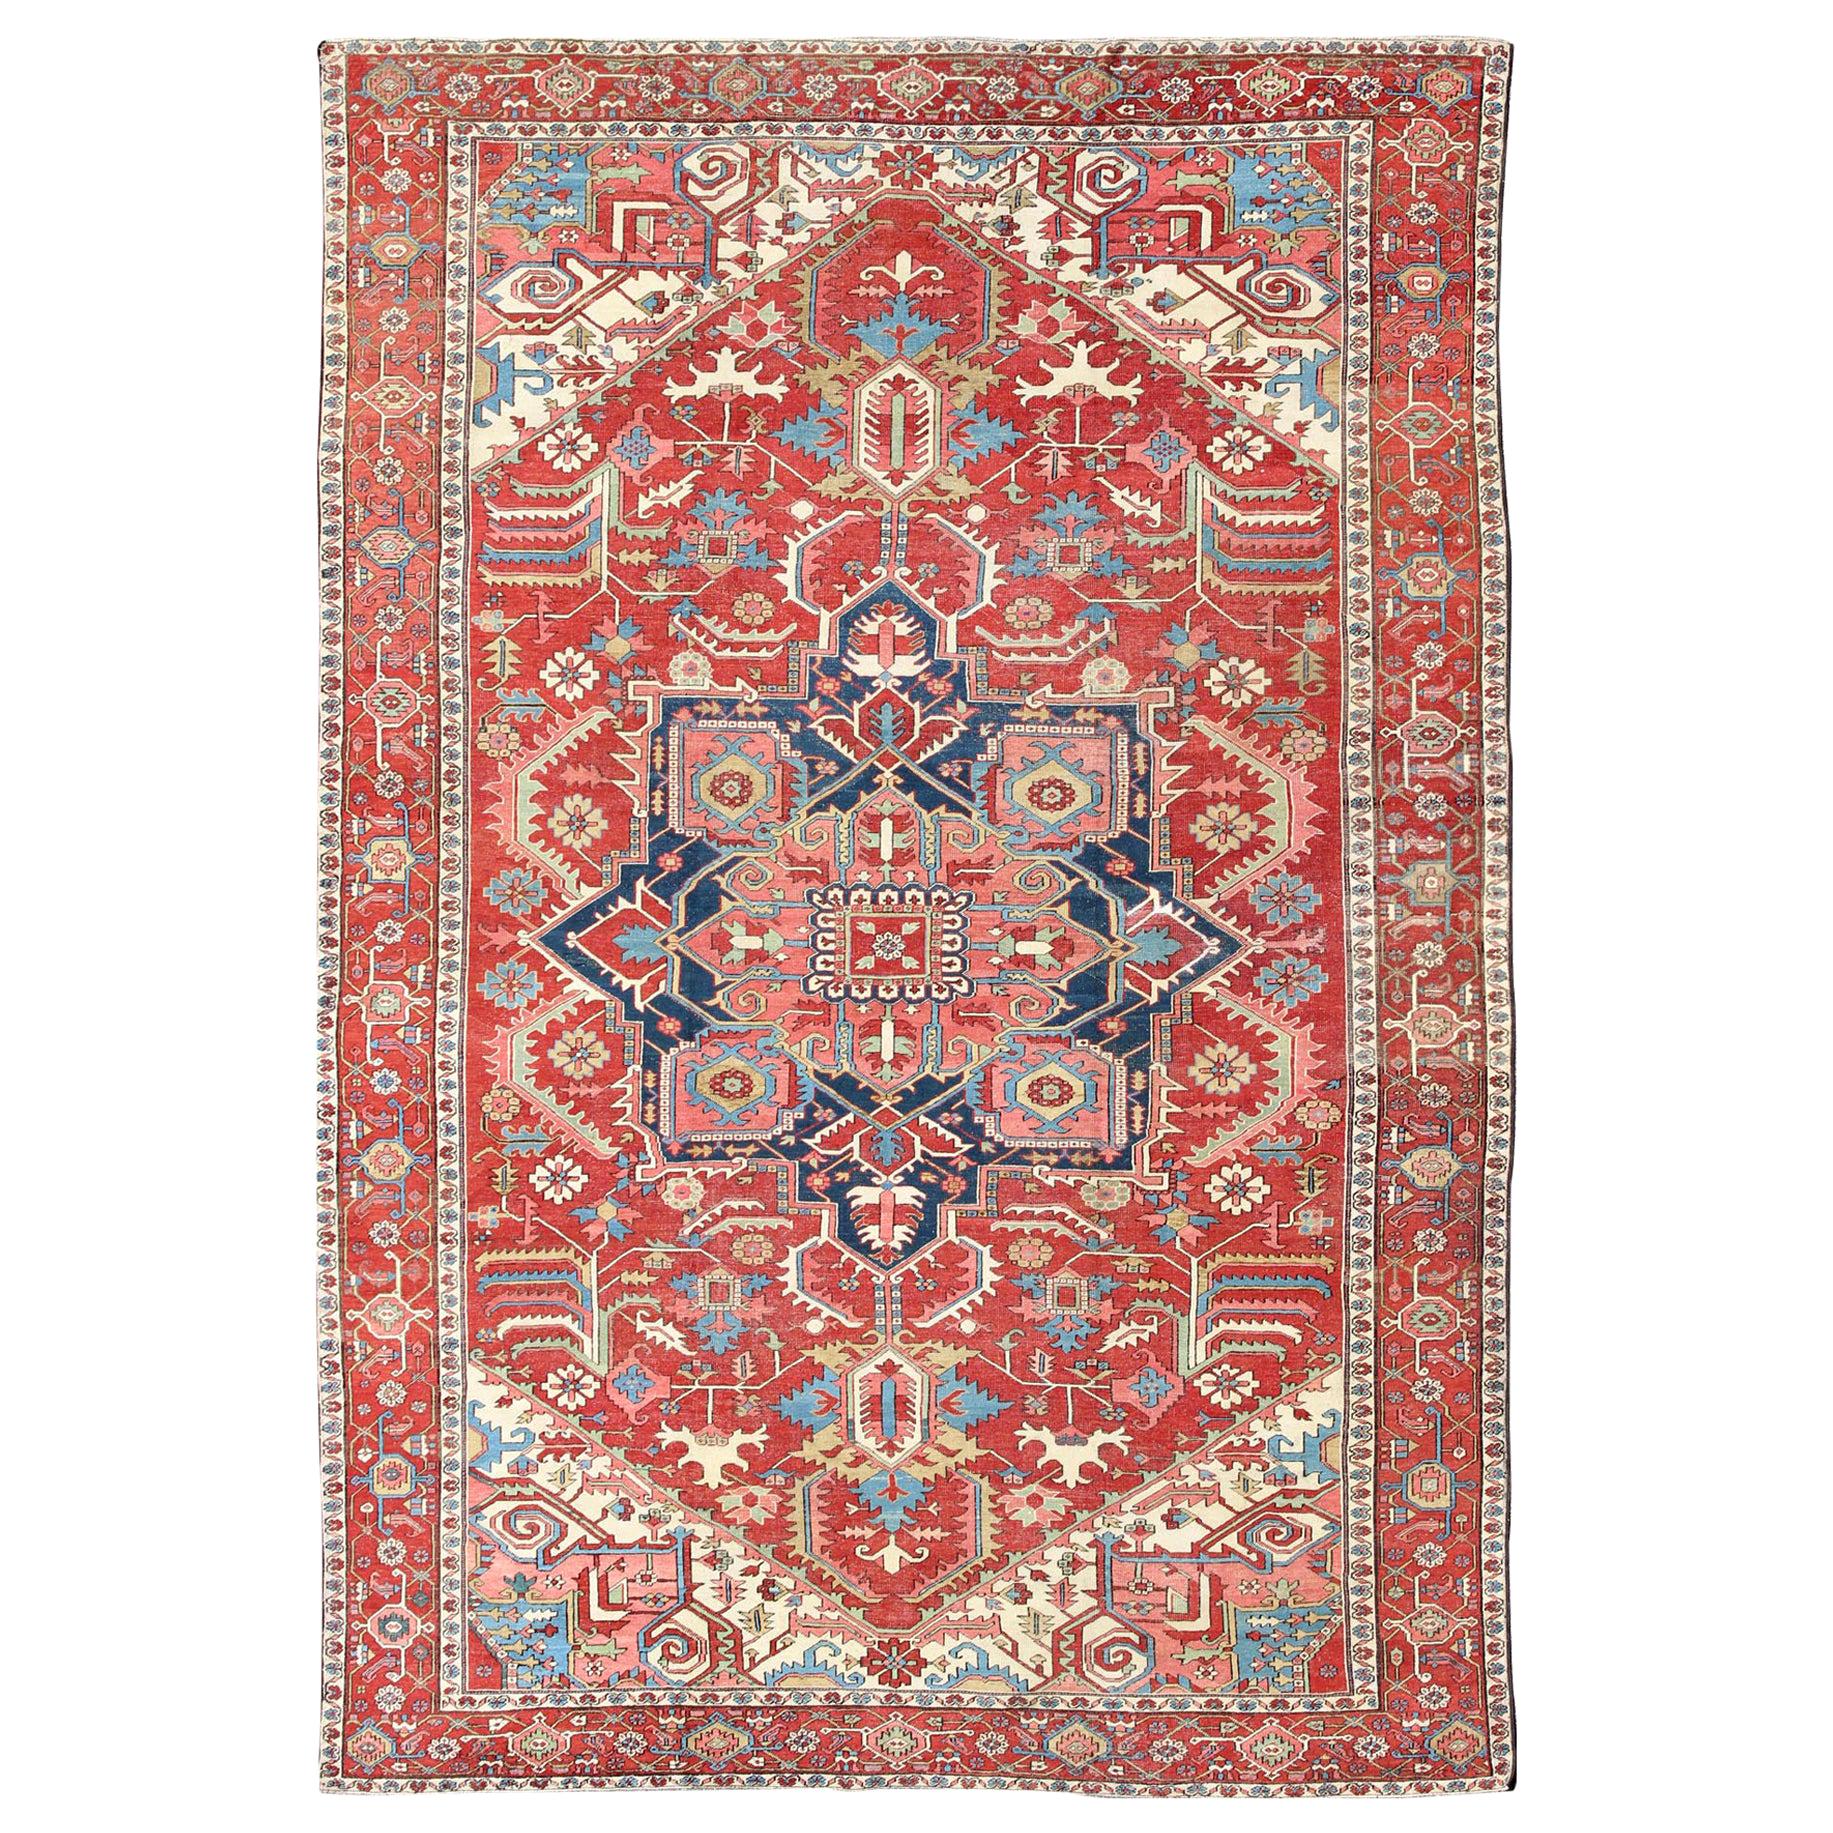 Antique Persian Serapi Carpet in Warm Red, Blue Colors and Geometric Design